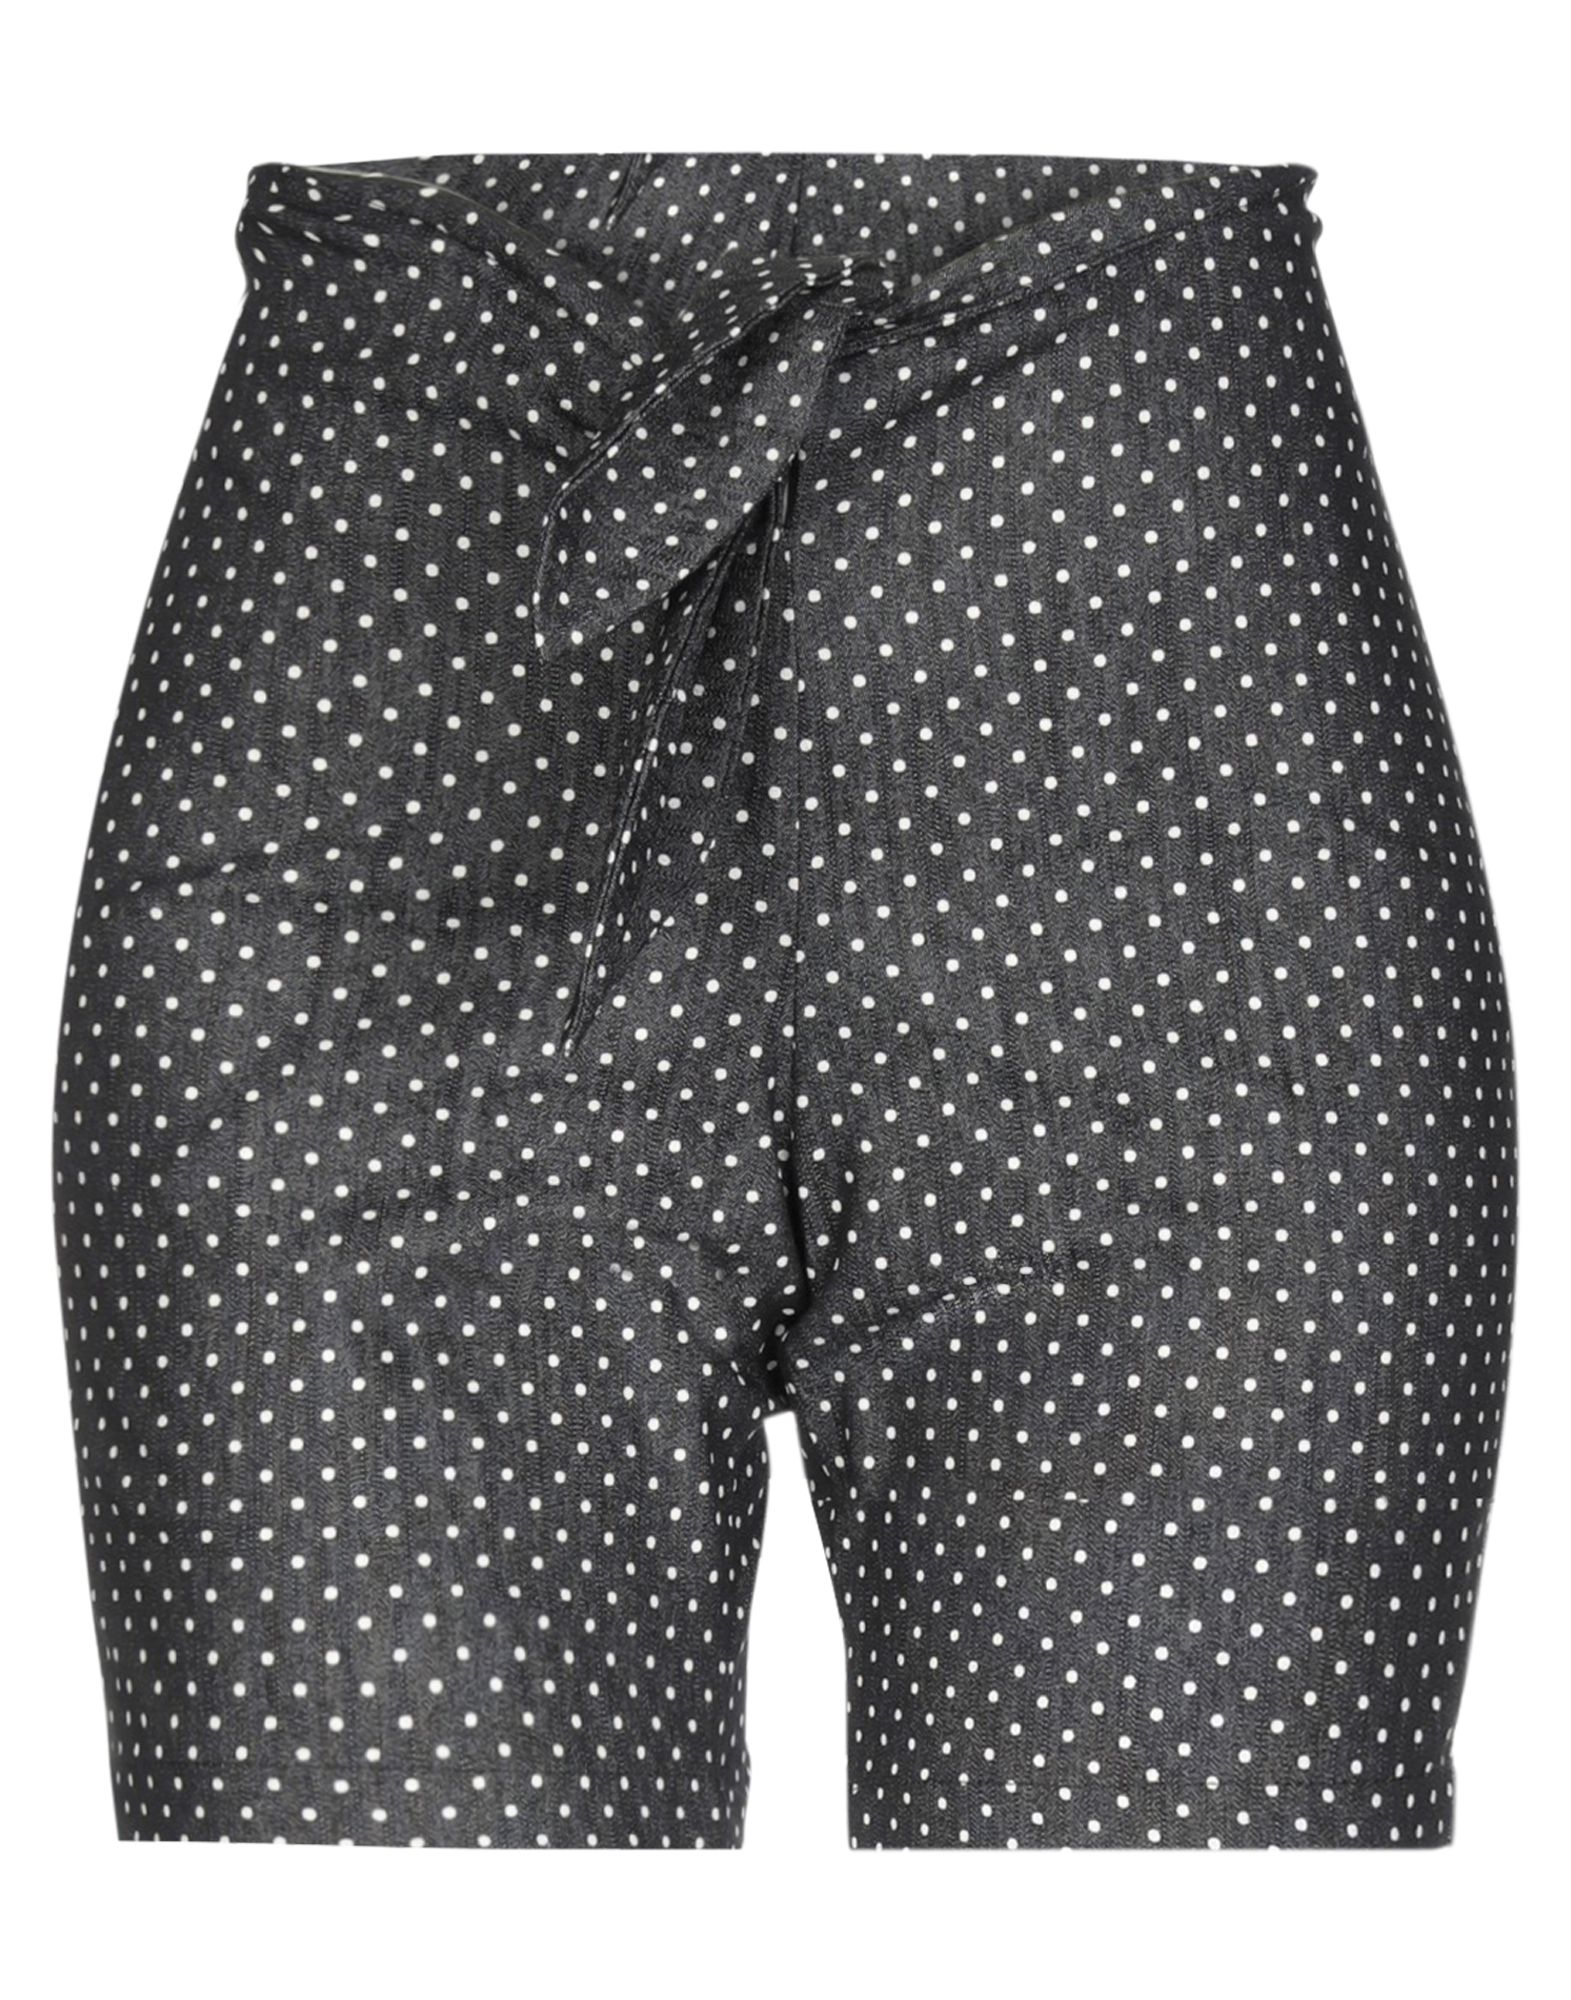 X'S MILANOX'S MILANO Denim shorts | DailyMail